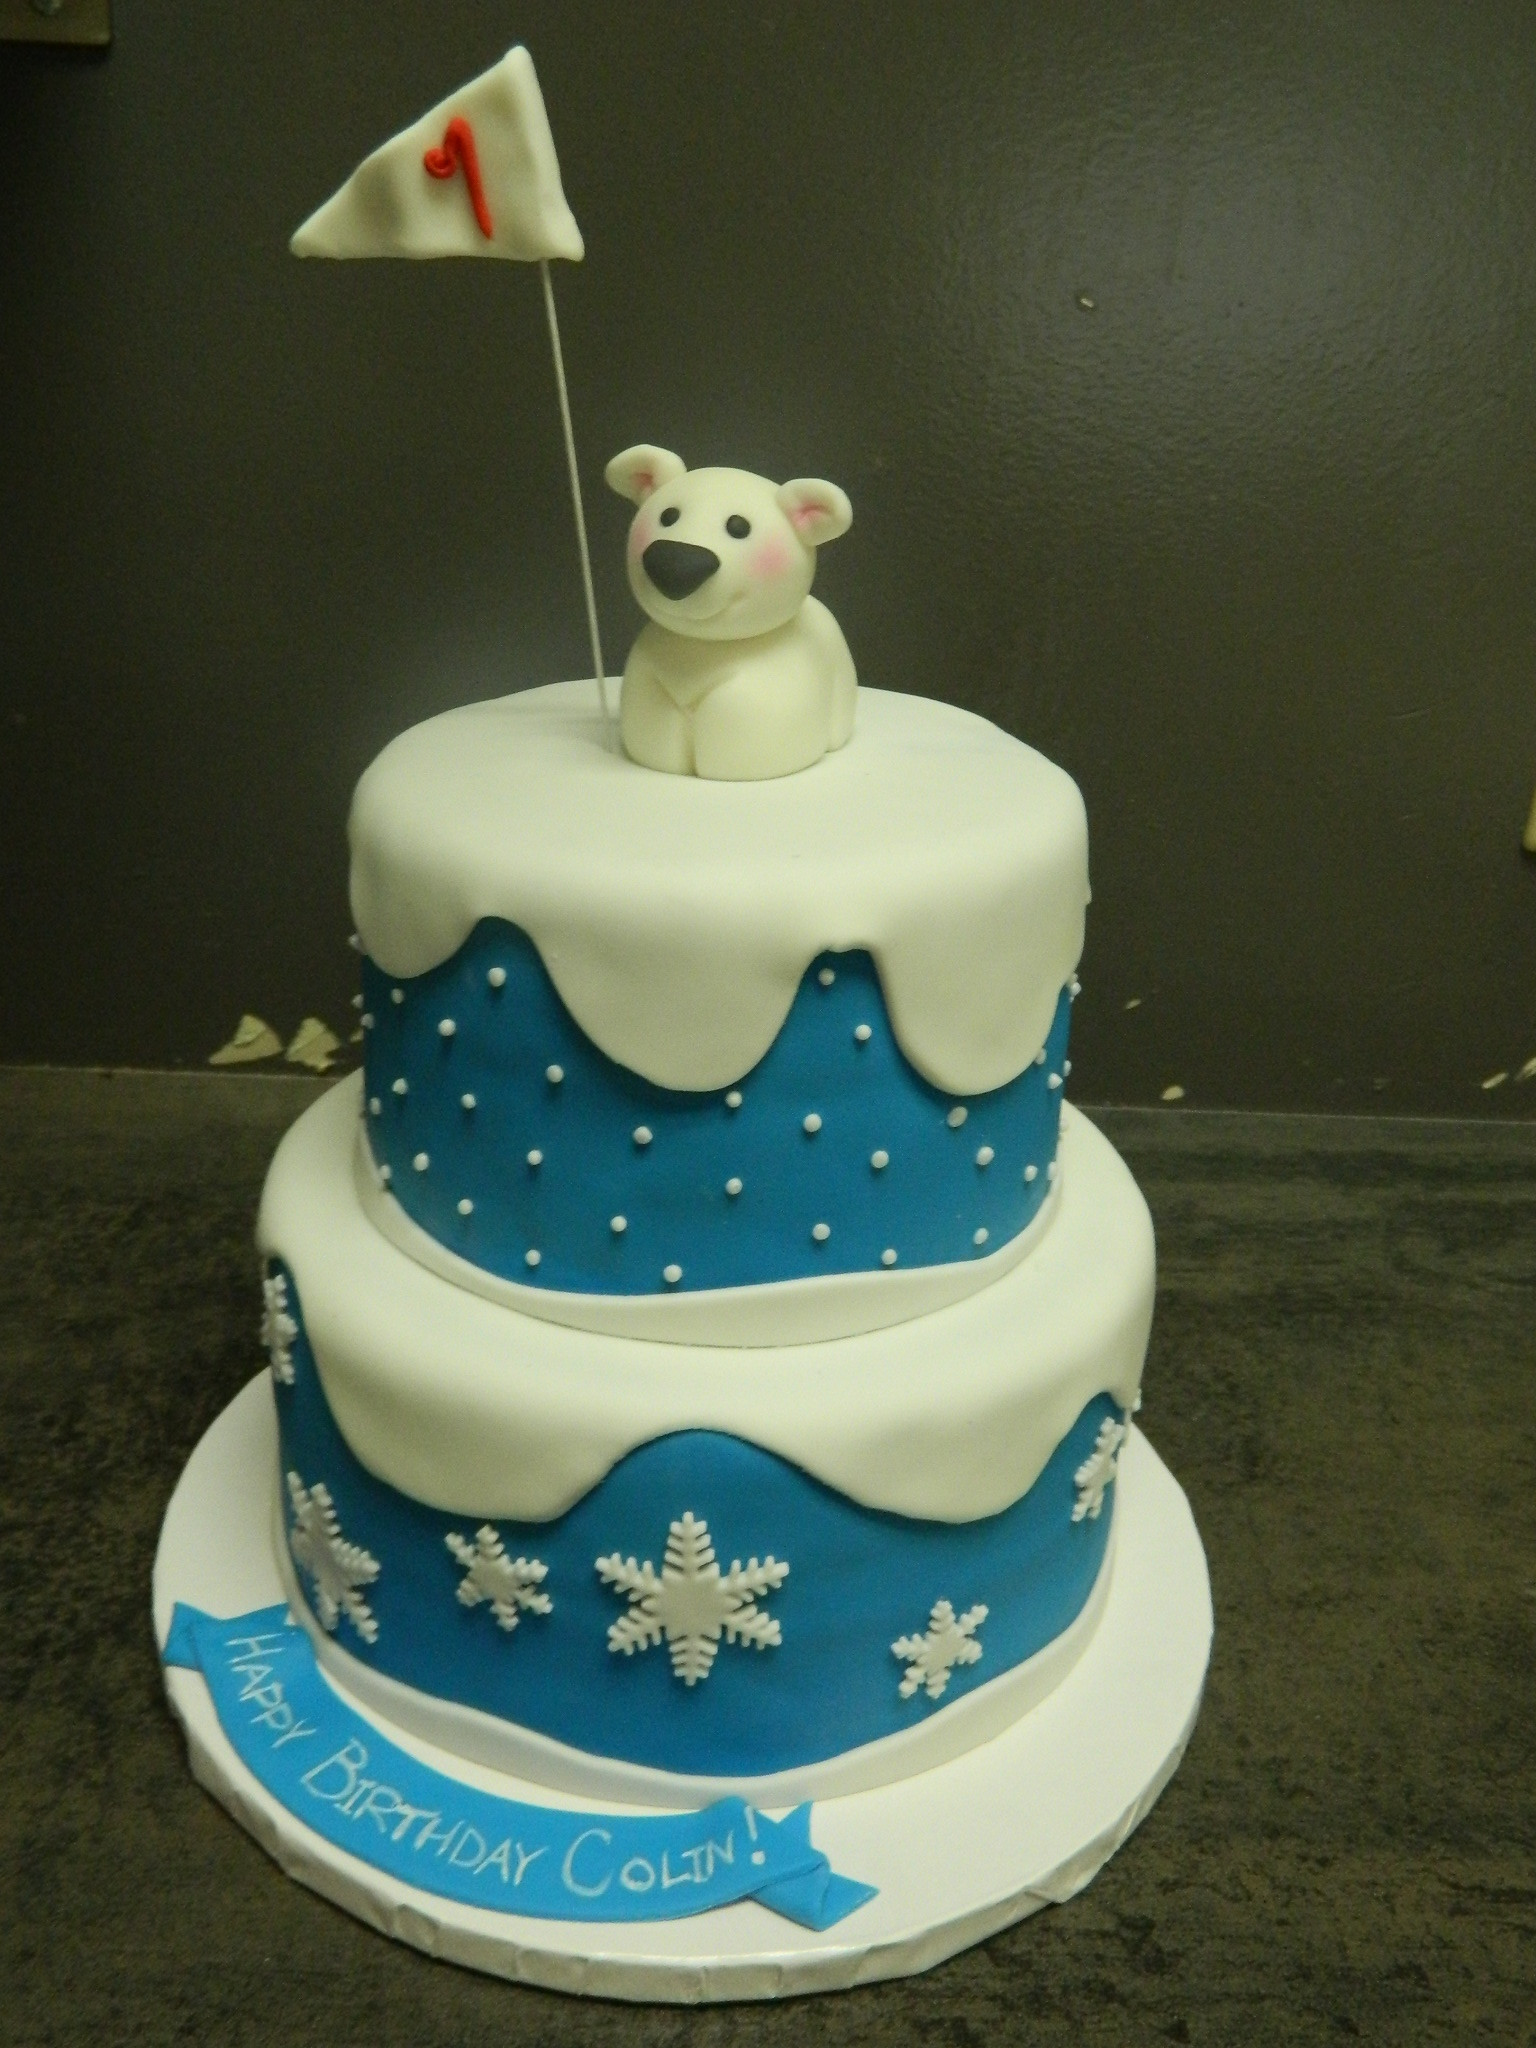 Best ideas about Image Of Birthday Cake
. Save or Pin Custom Cakes Hey Cupcake London tario Now.